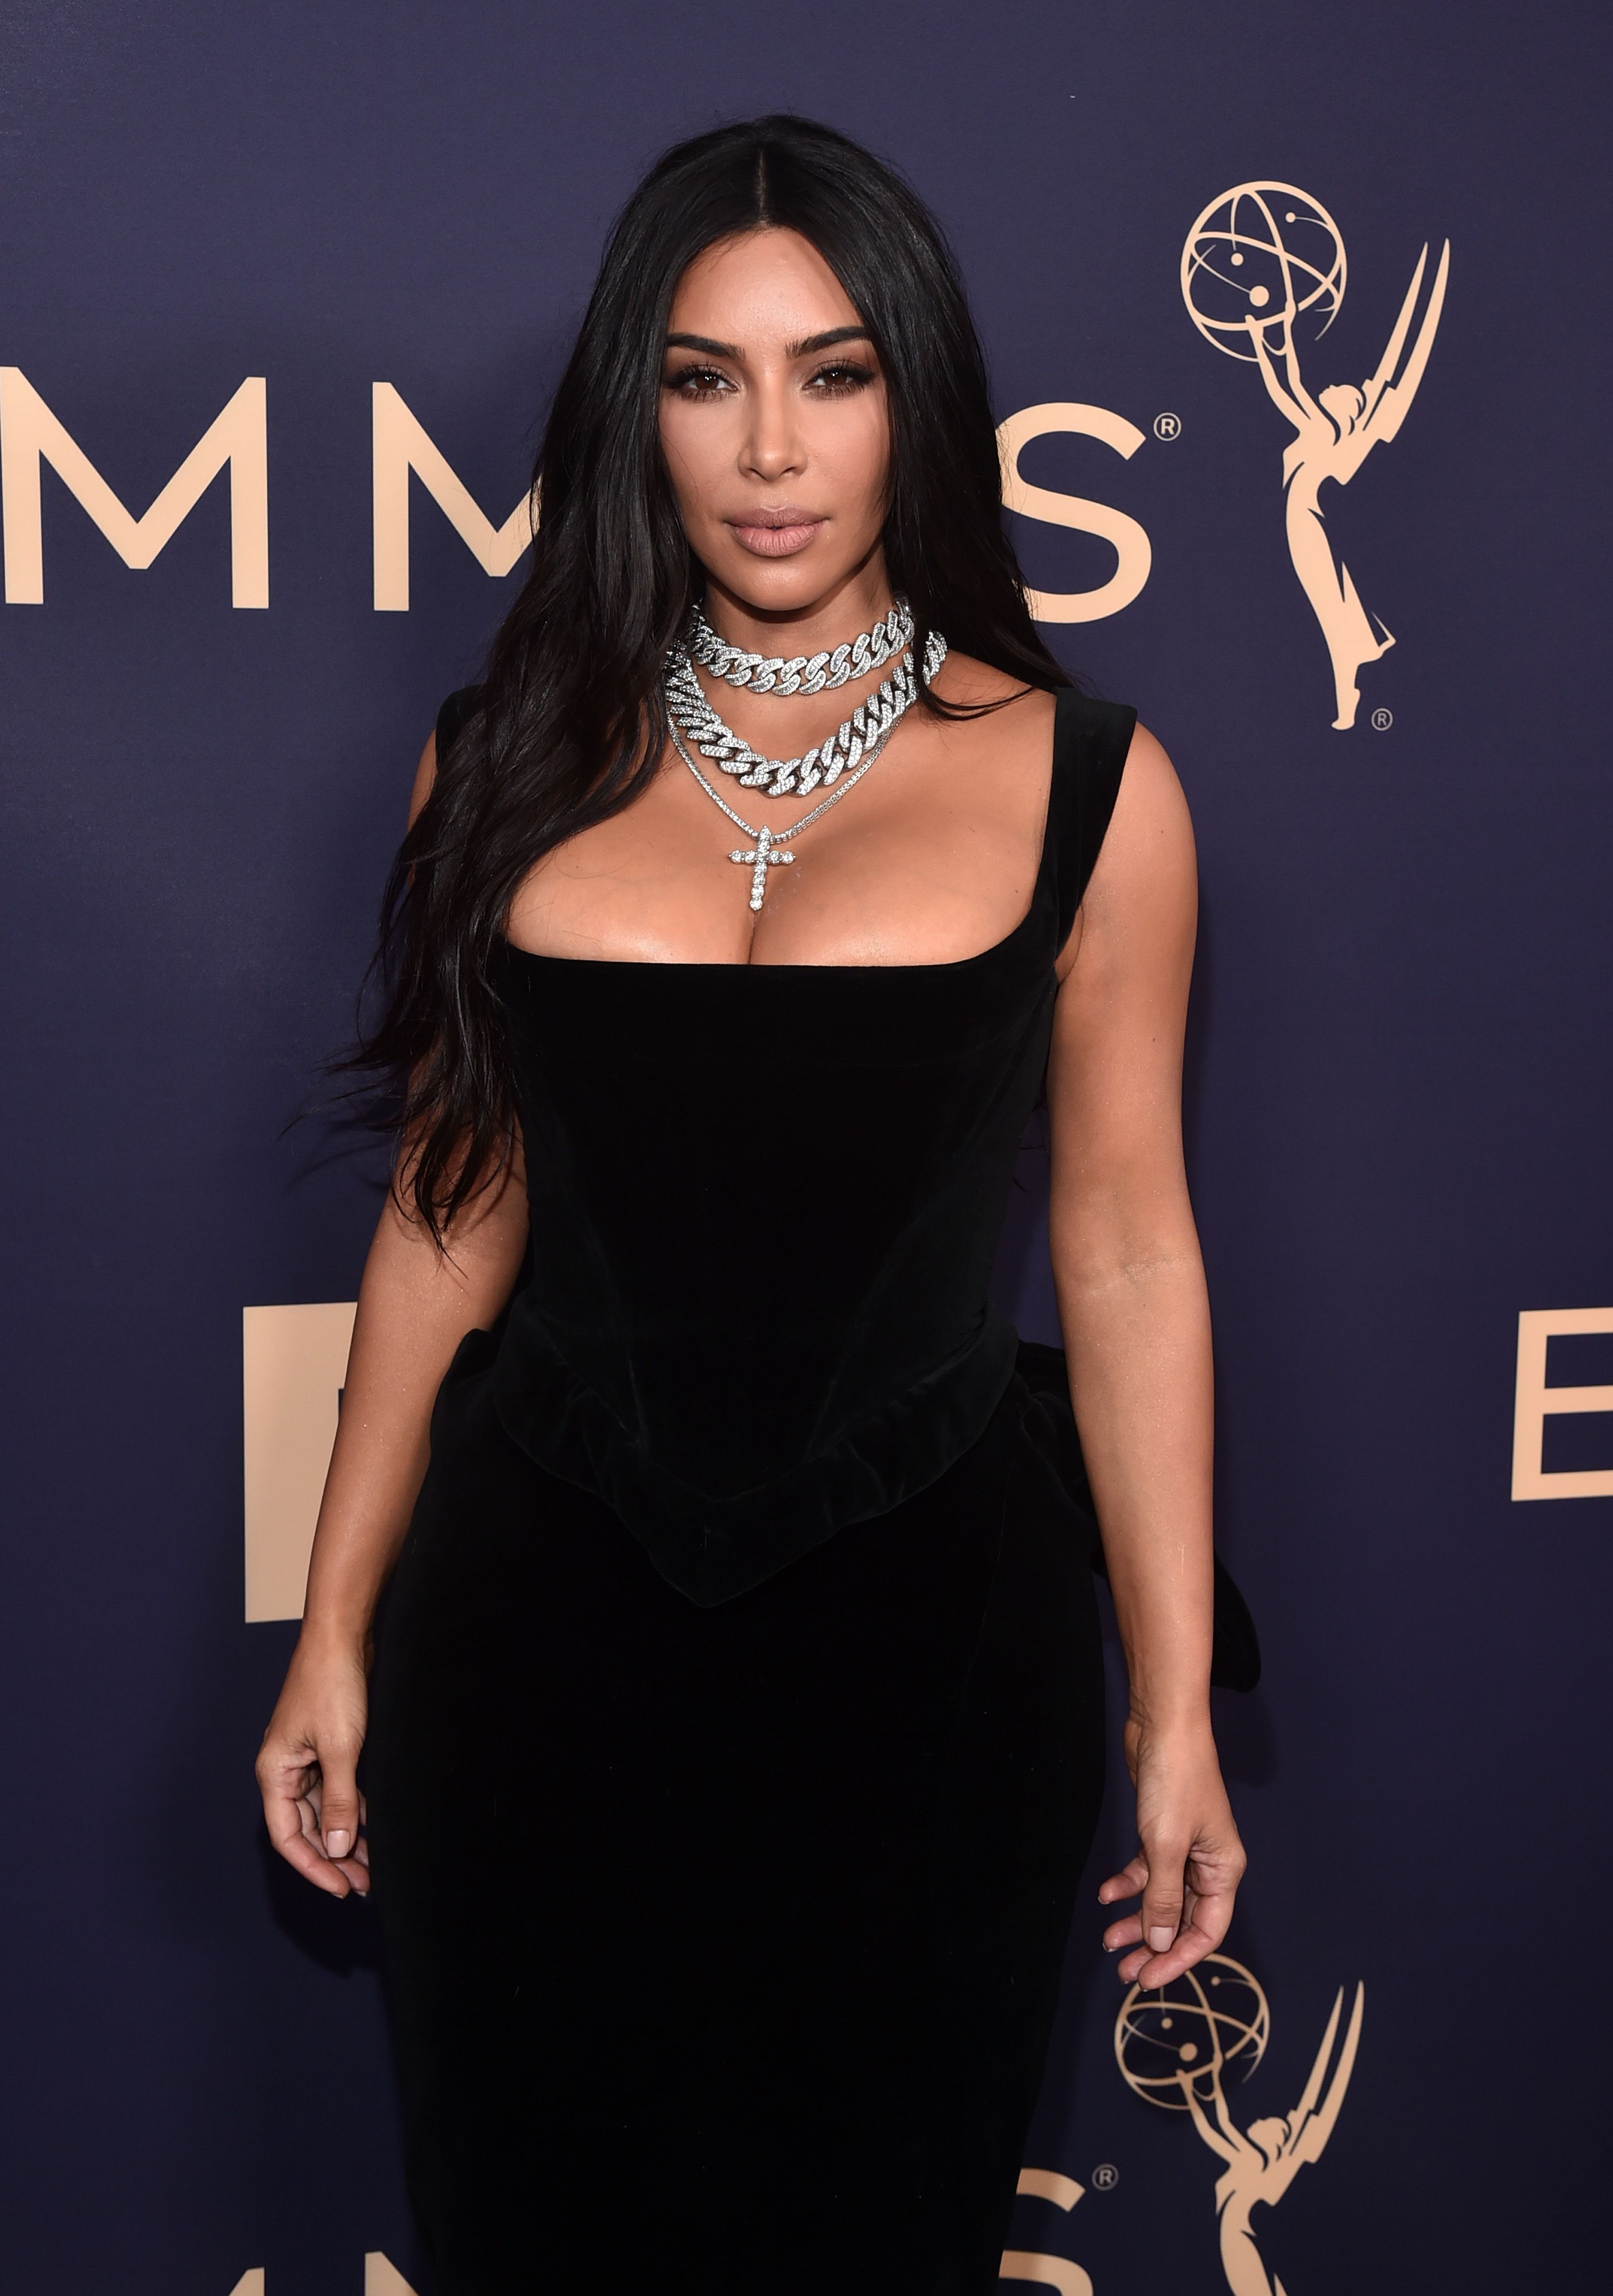 Kim Kardashian's Balenciaga fitted black dress - Red Carpet Fashion Awards